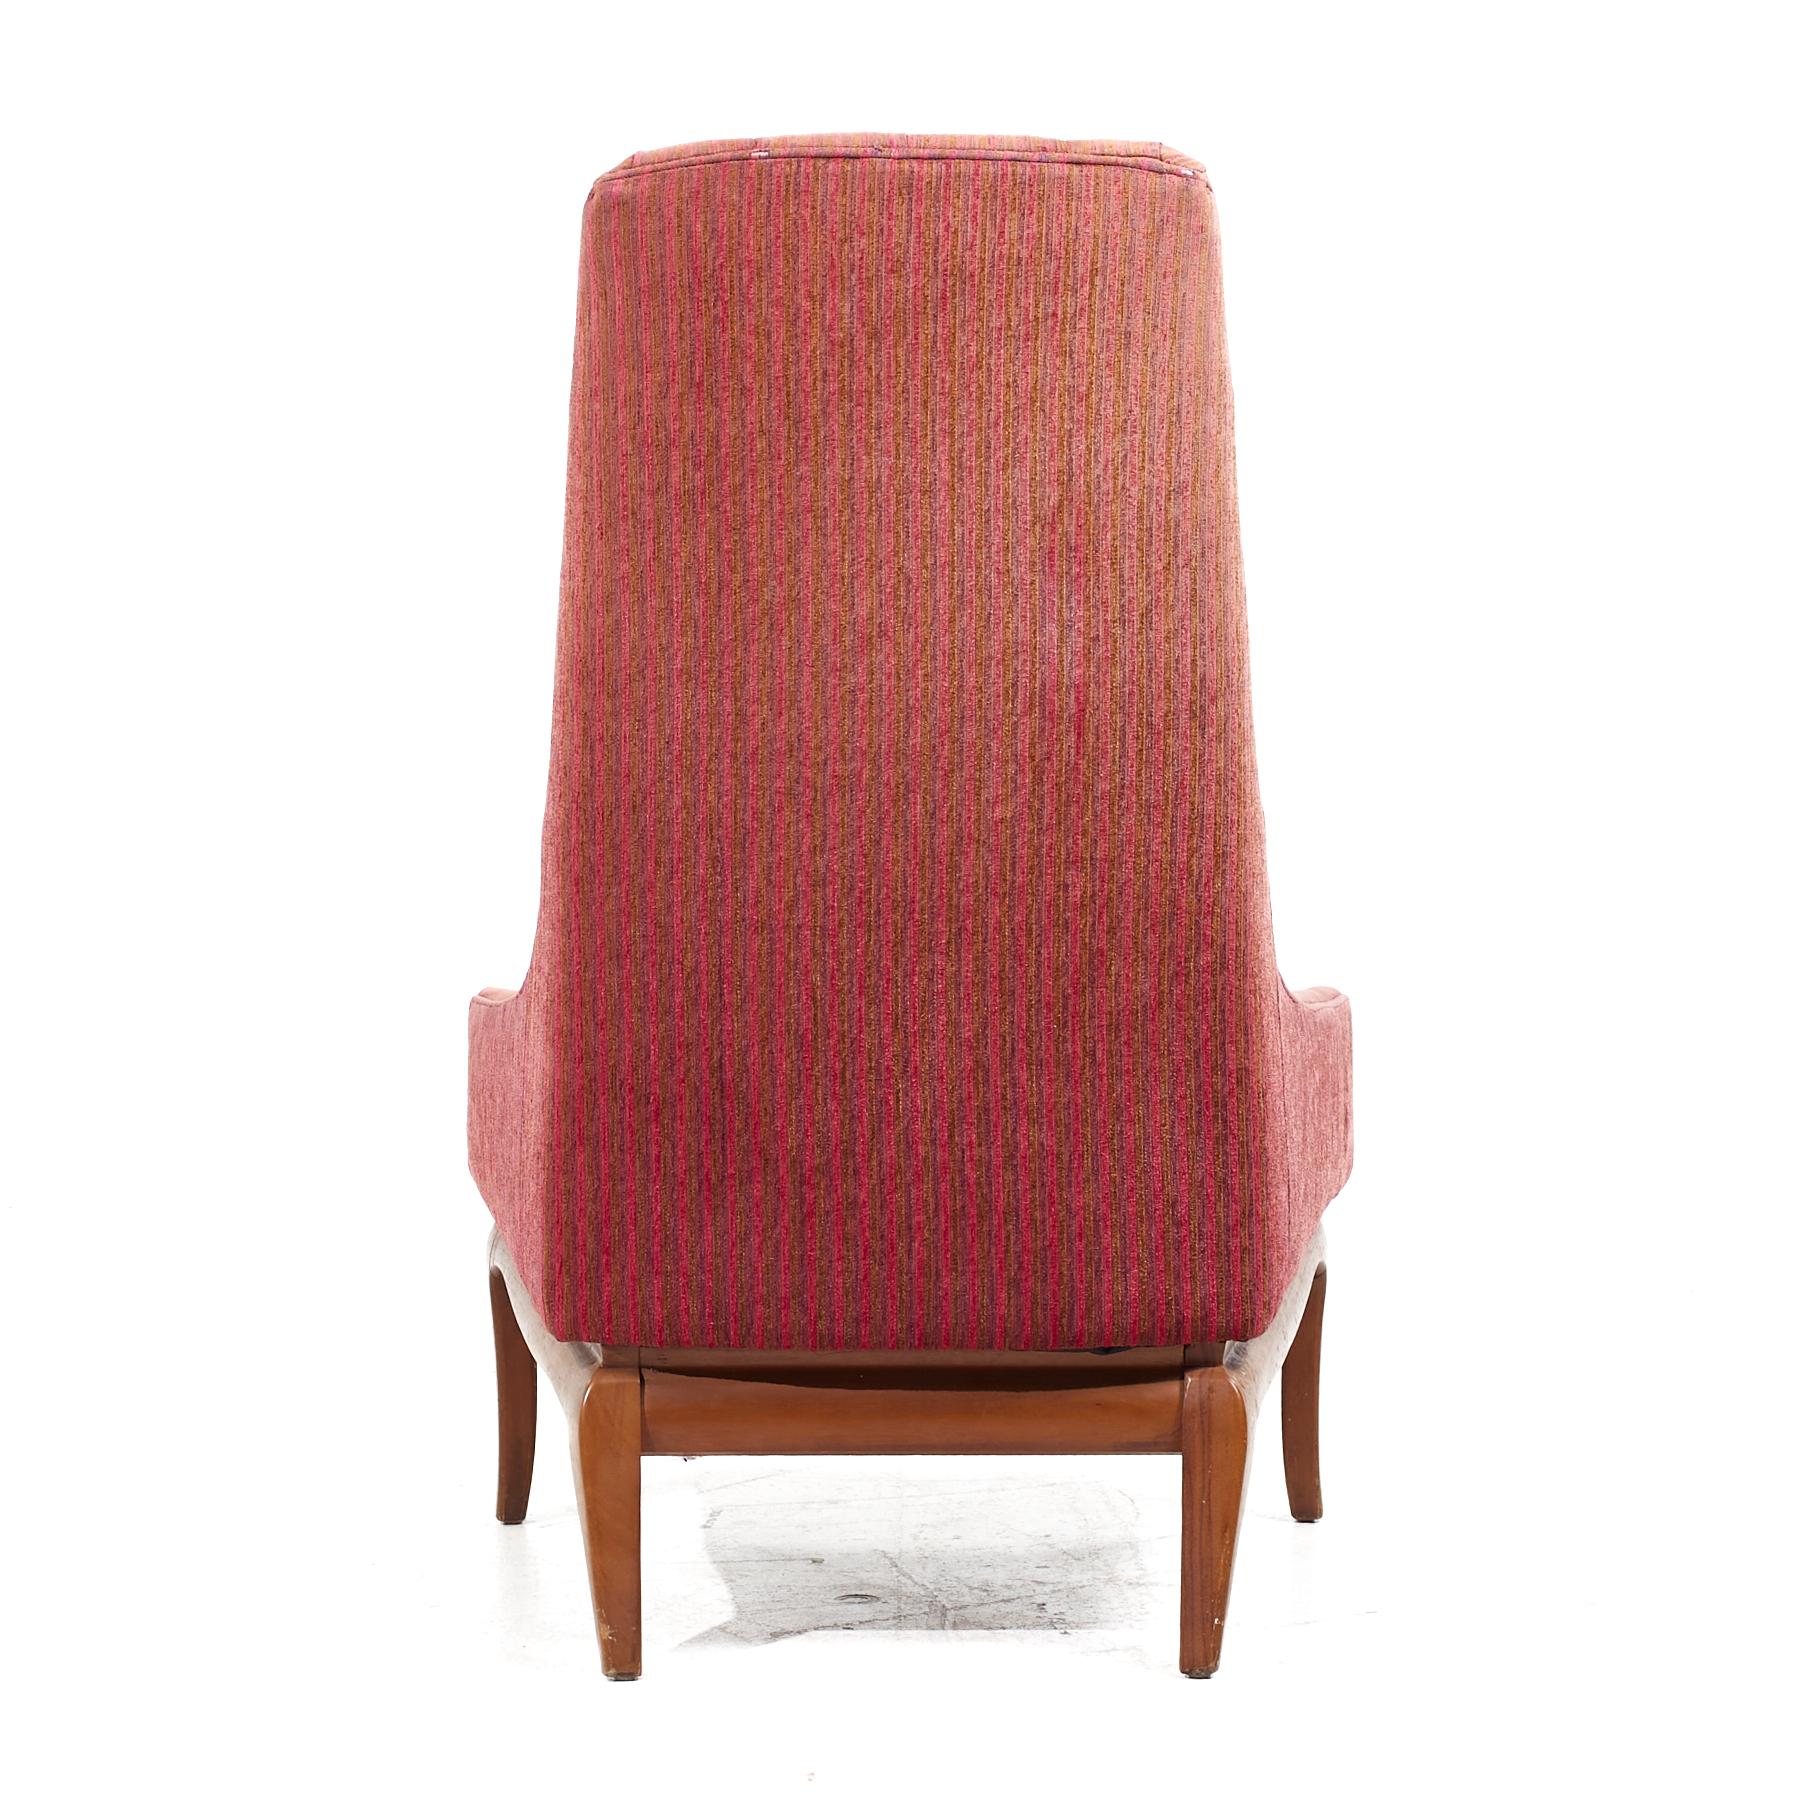 T H Robsjohn Gibbings for Widdicomb Mid Century Highback Lounge Chairs - Pair 1 For Sale 1